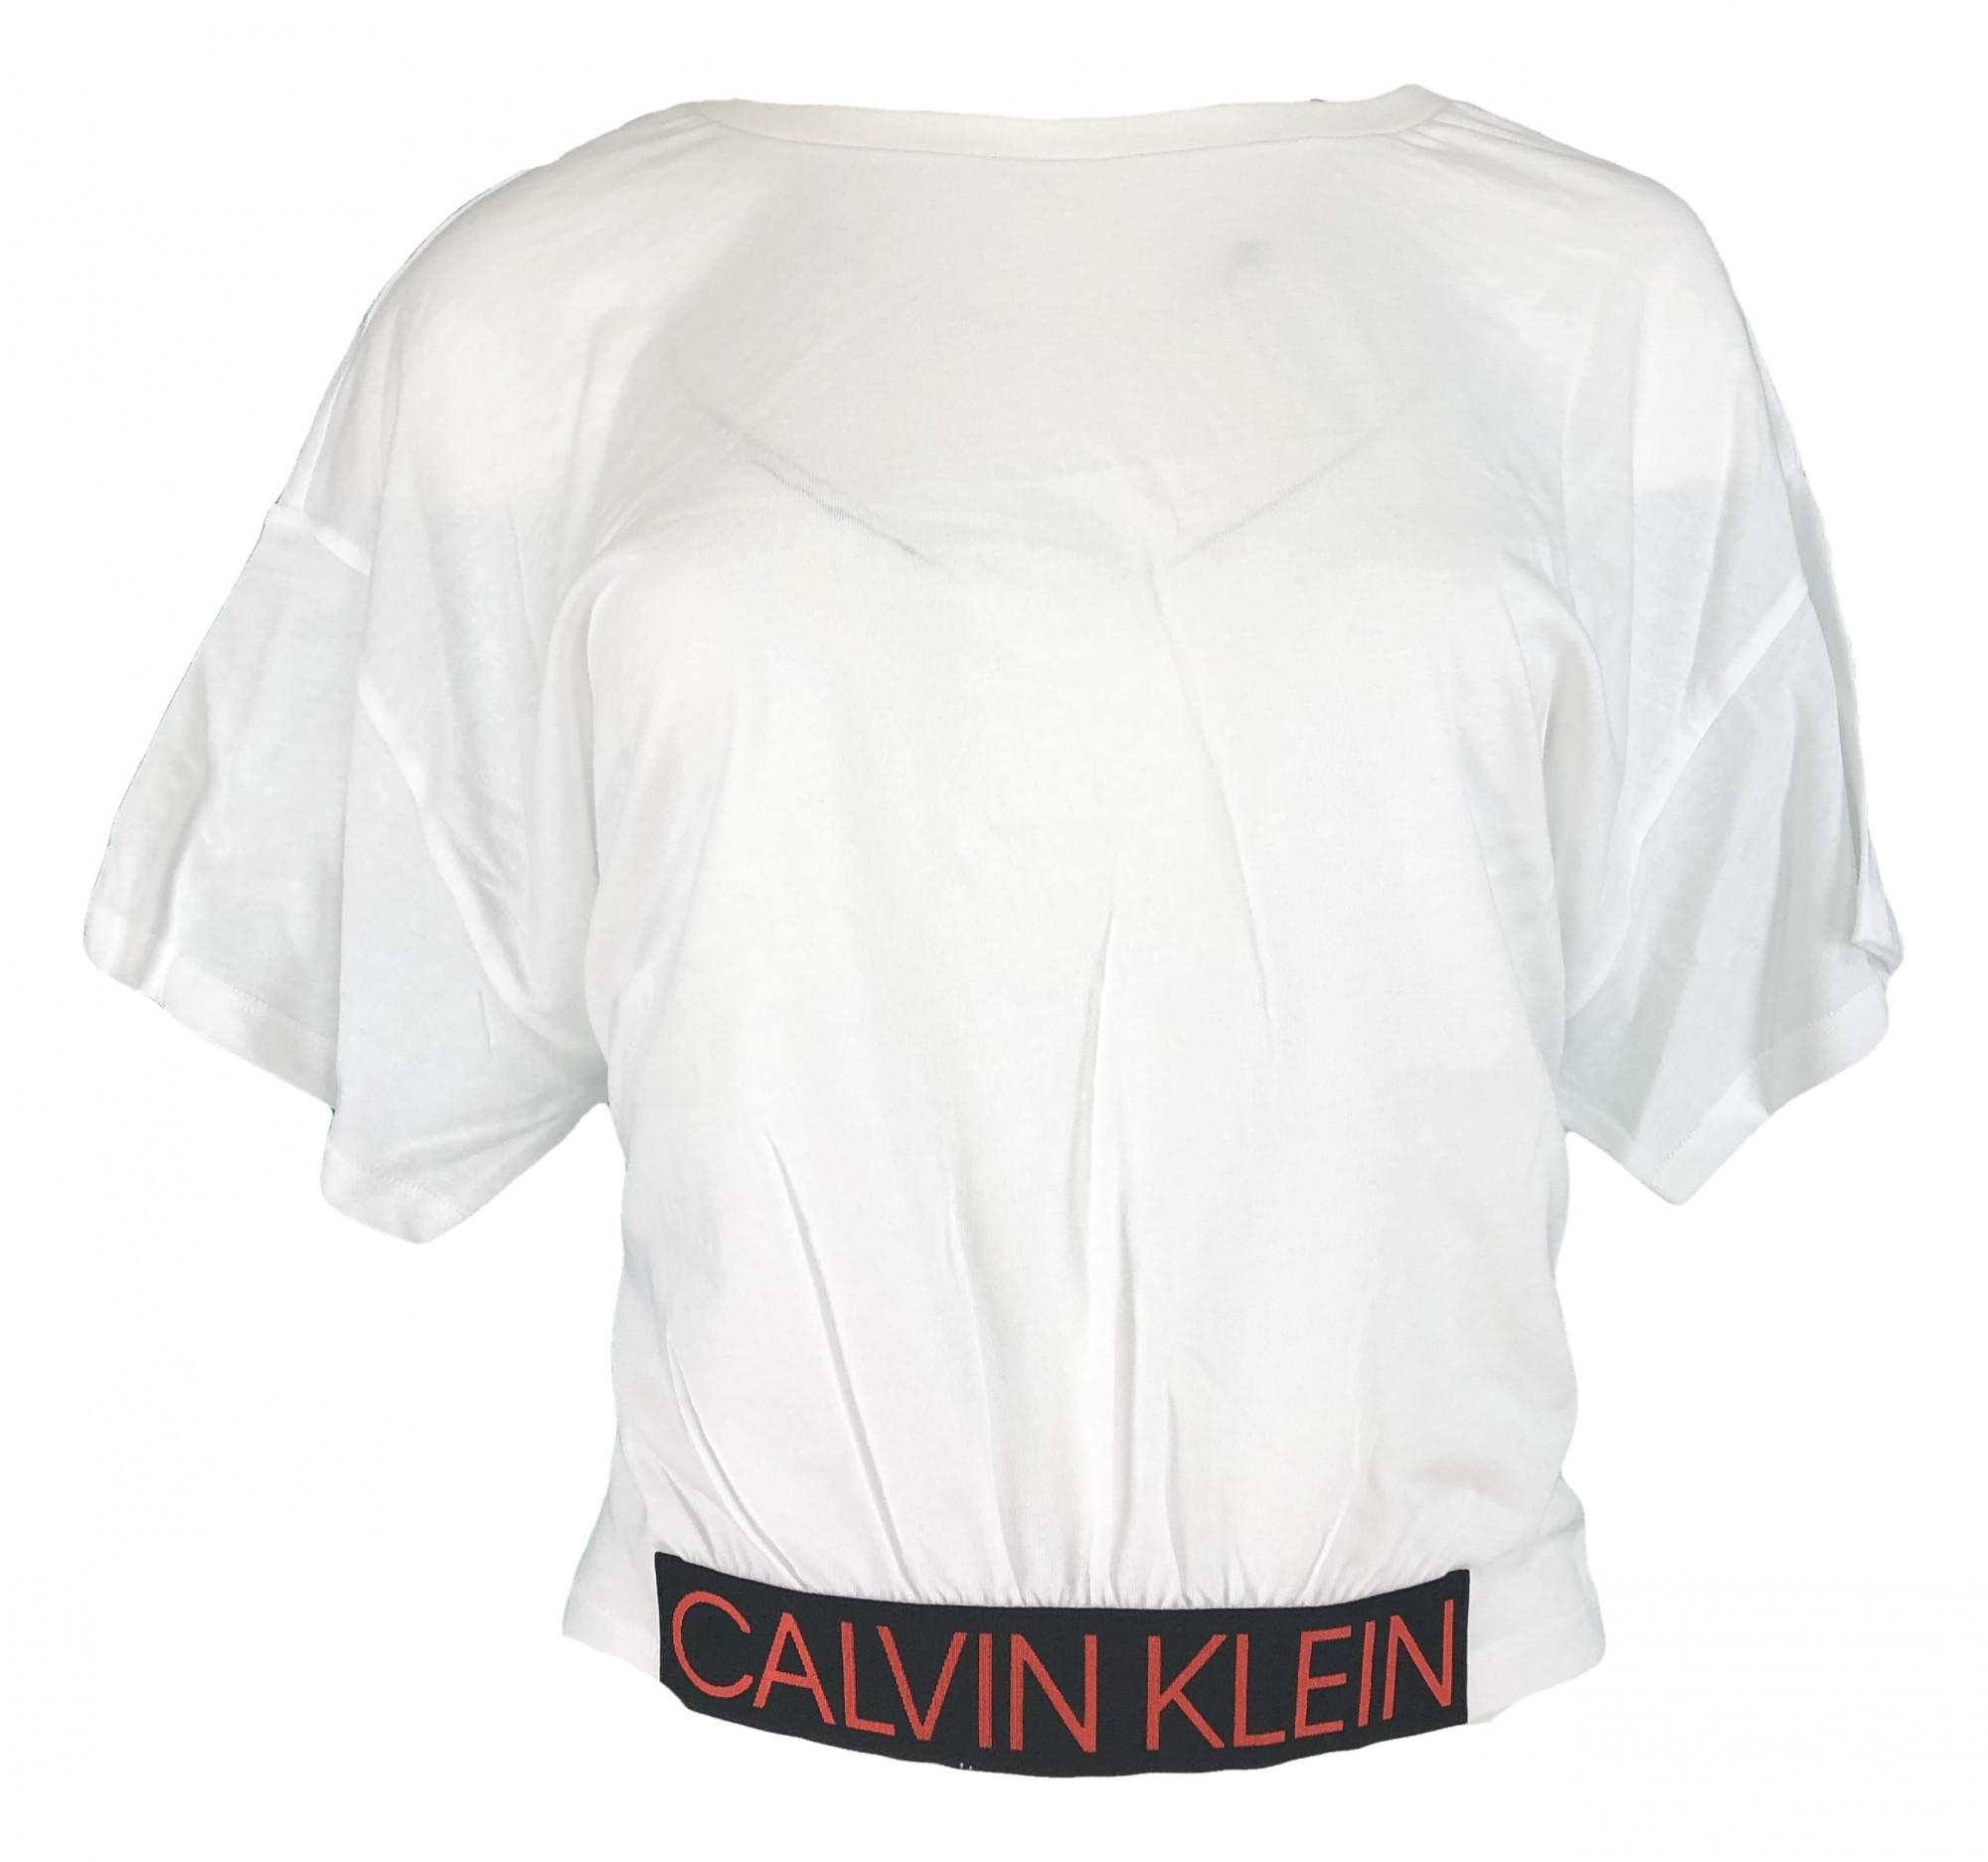 Dámské triko s krátkým rukávem model 7420702 bílá bílá s potiskem L - Calvin Klein